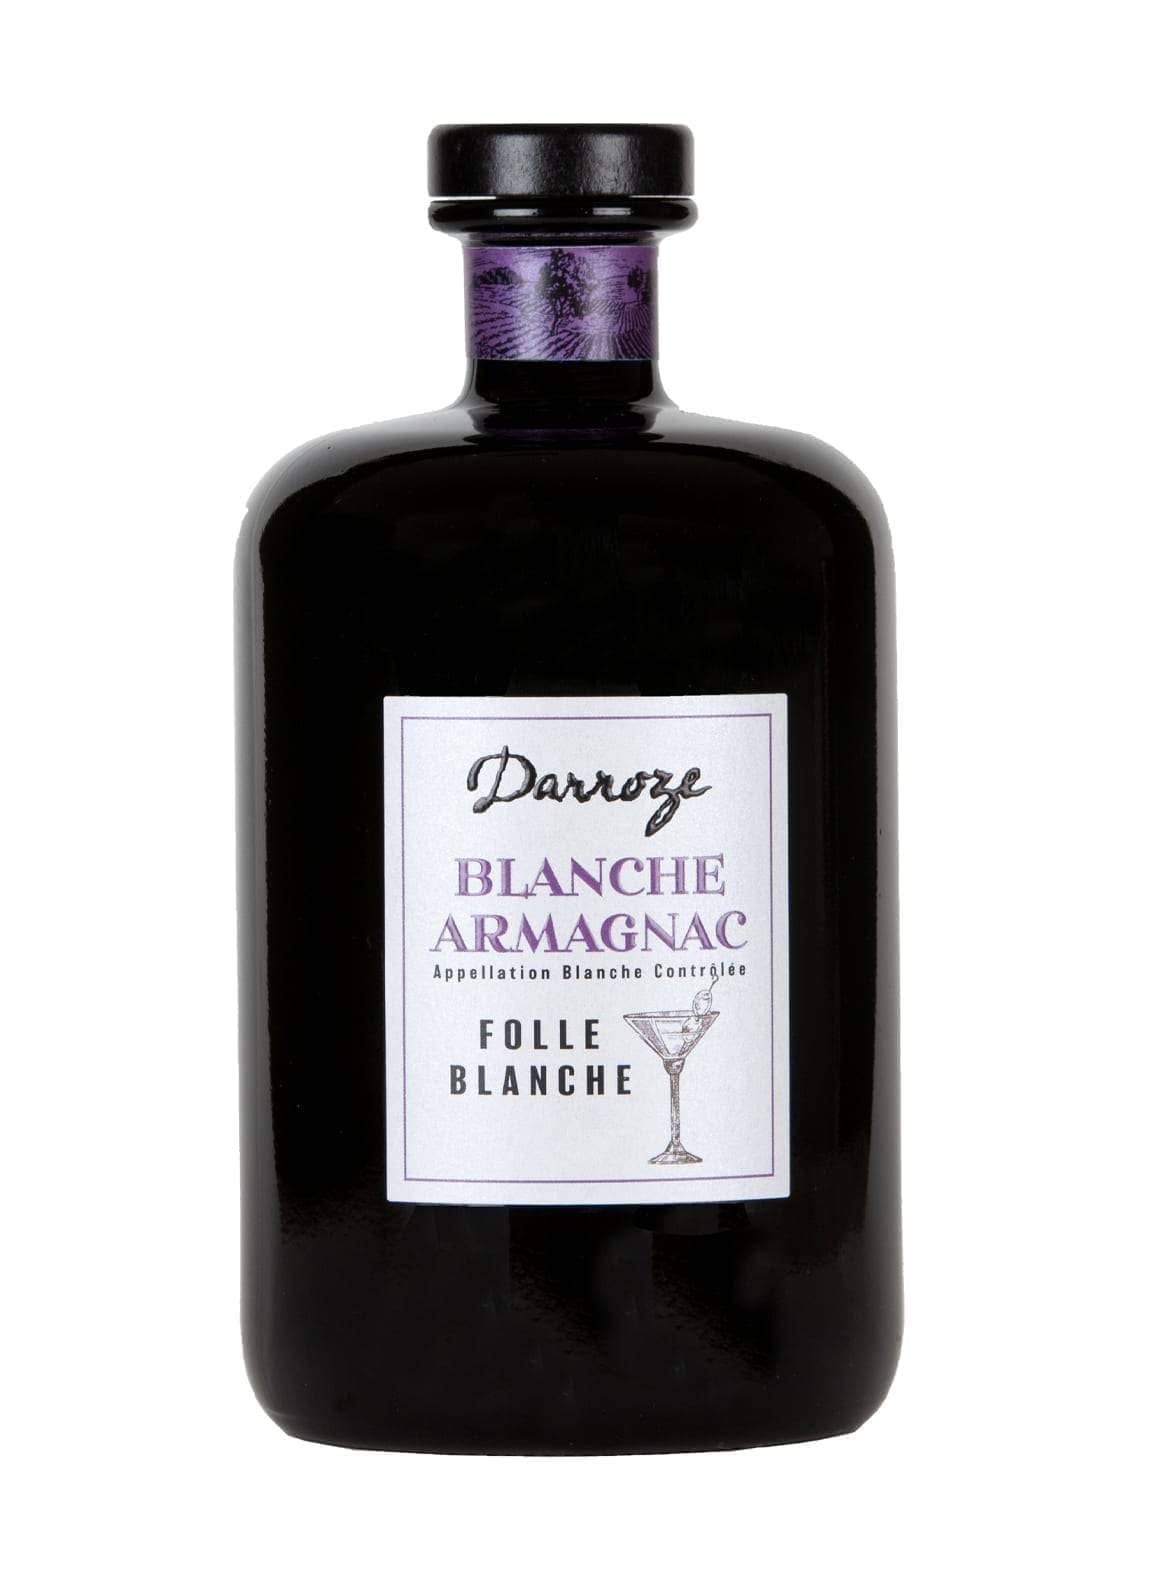 Darroze Blanche d'Armagnac 100% Folle Blanche 49% 700ml | Brandy | Shop online at Spirits of France